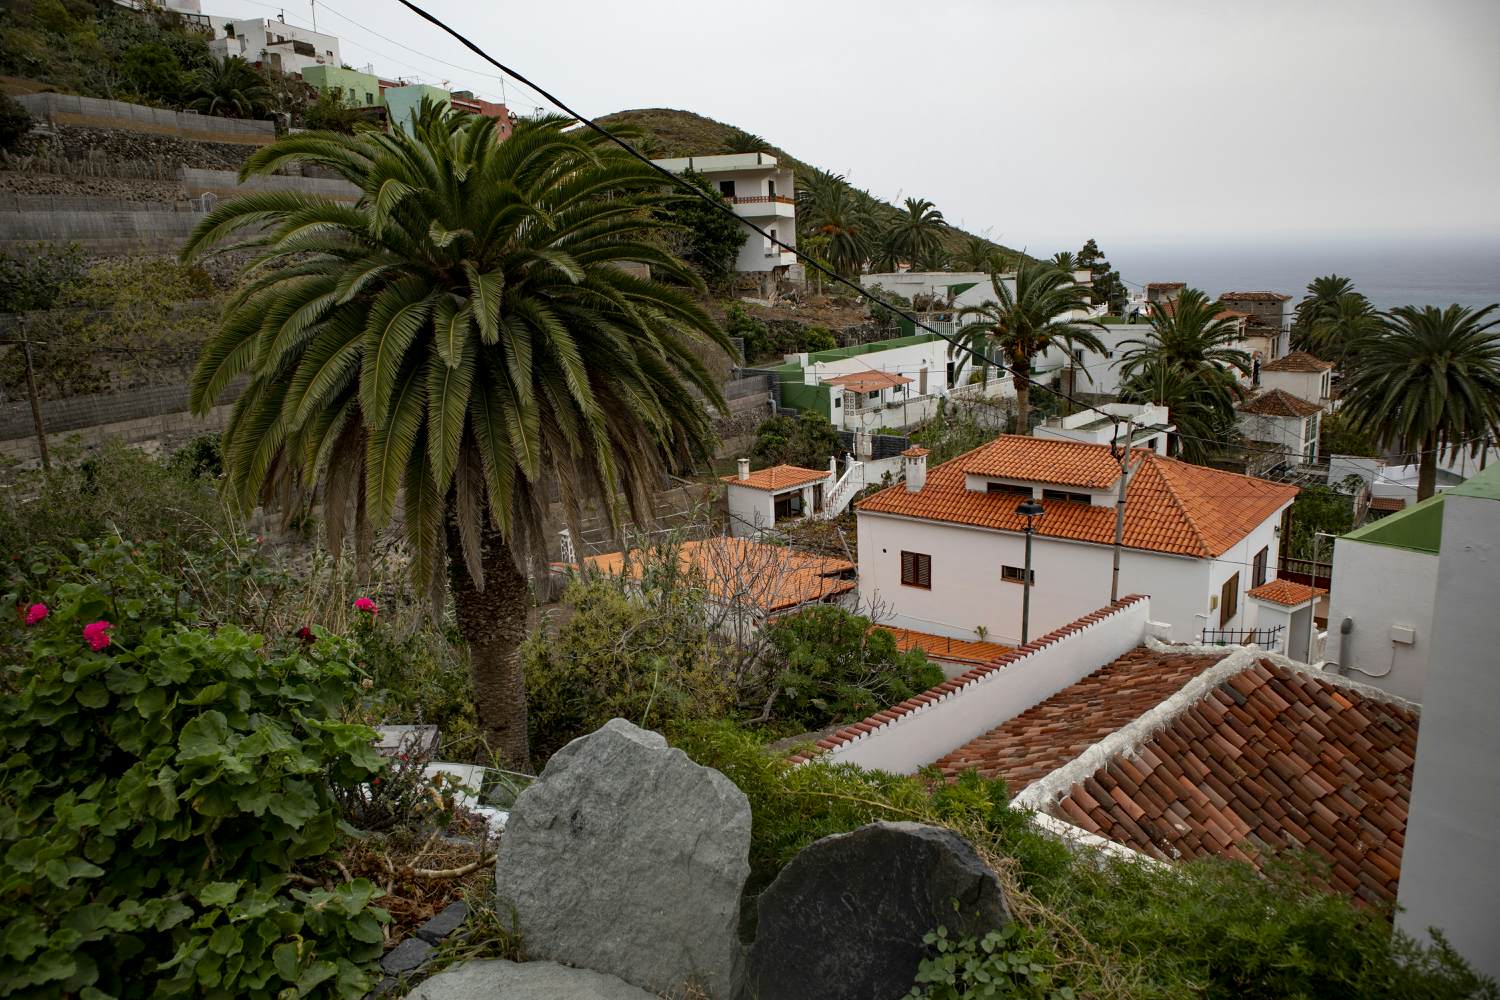 Blick auf den Ortsteil Portugal - Taganana